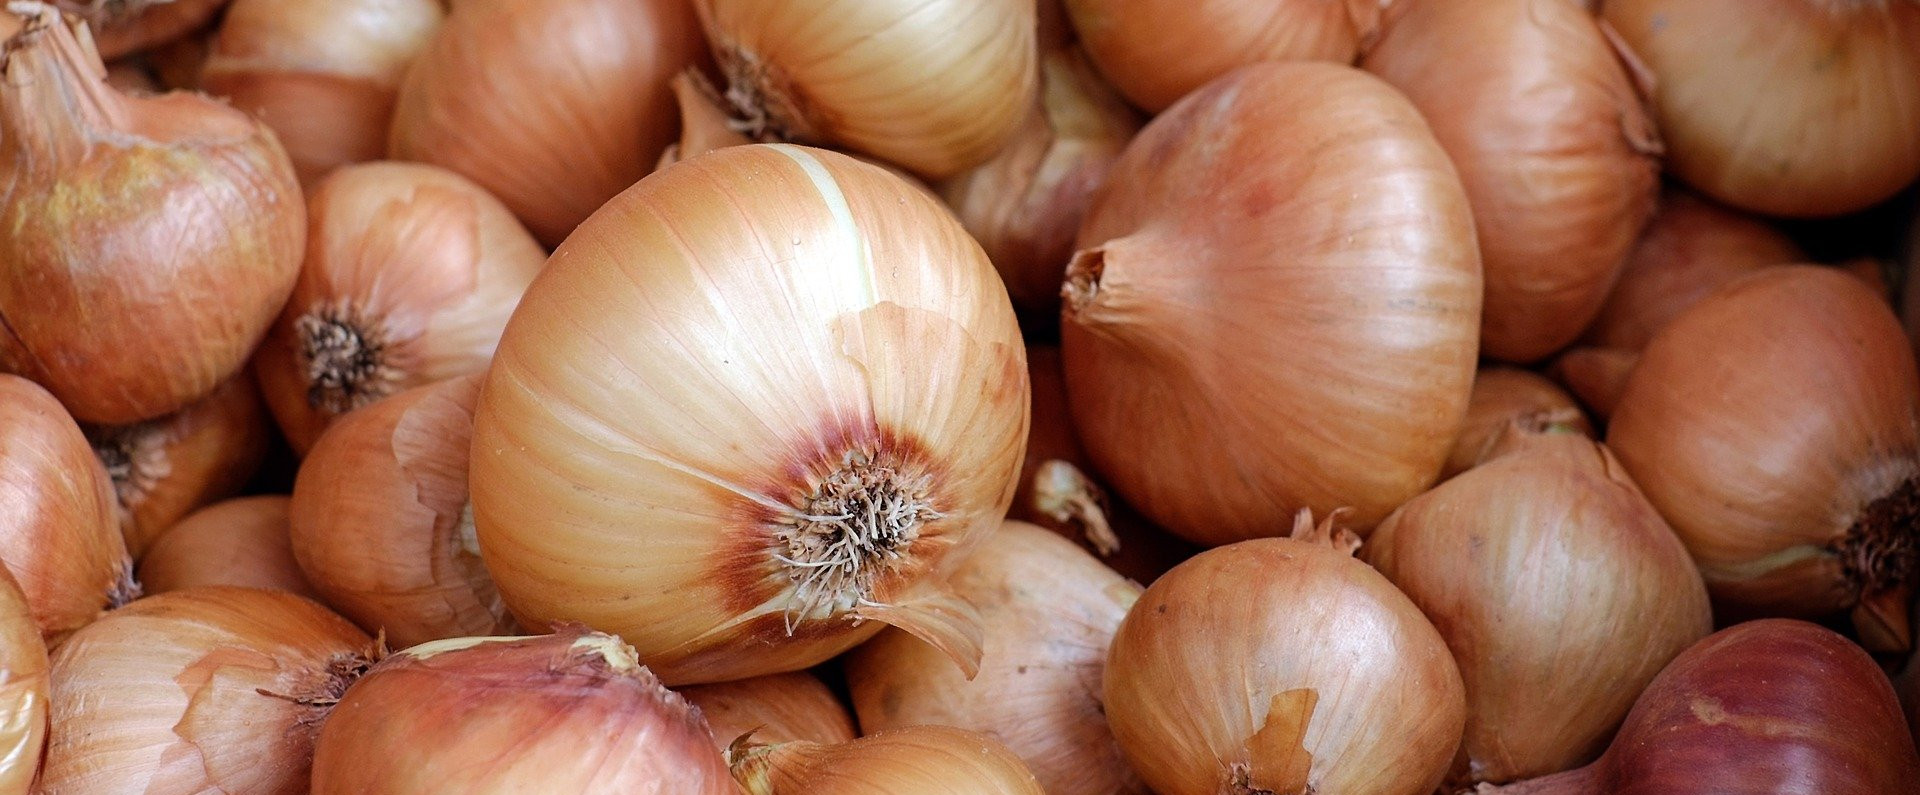 Onions 1397037 1920